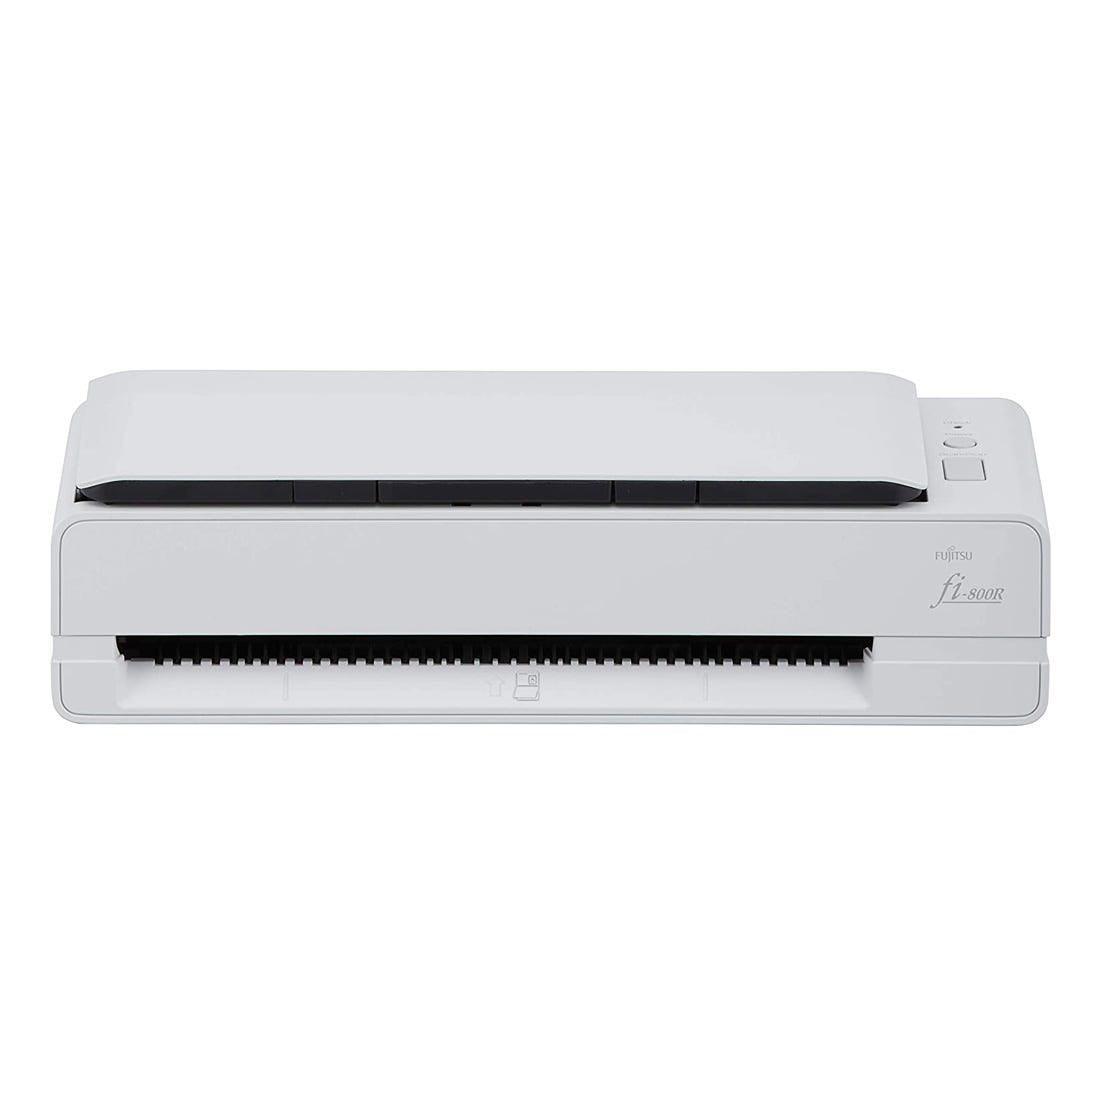 Scanner Fujitsu Fi-800R A4 Duplex 40ppm Color - CG01000-297501 - Mega Market